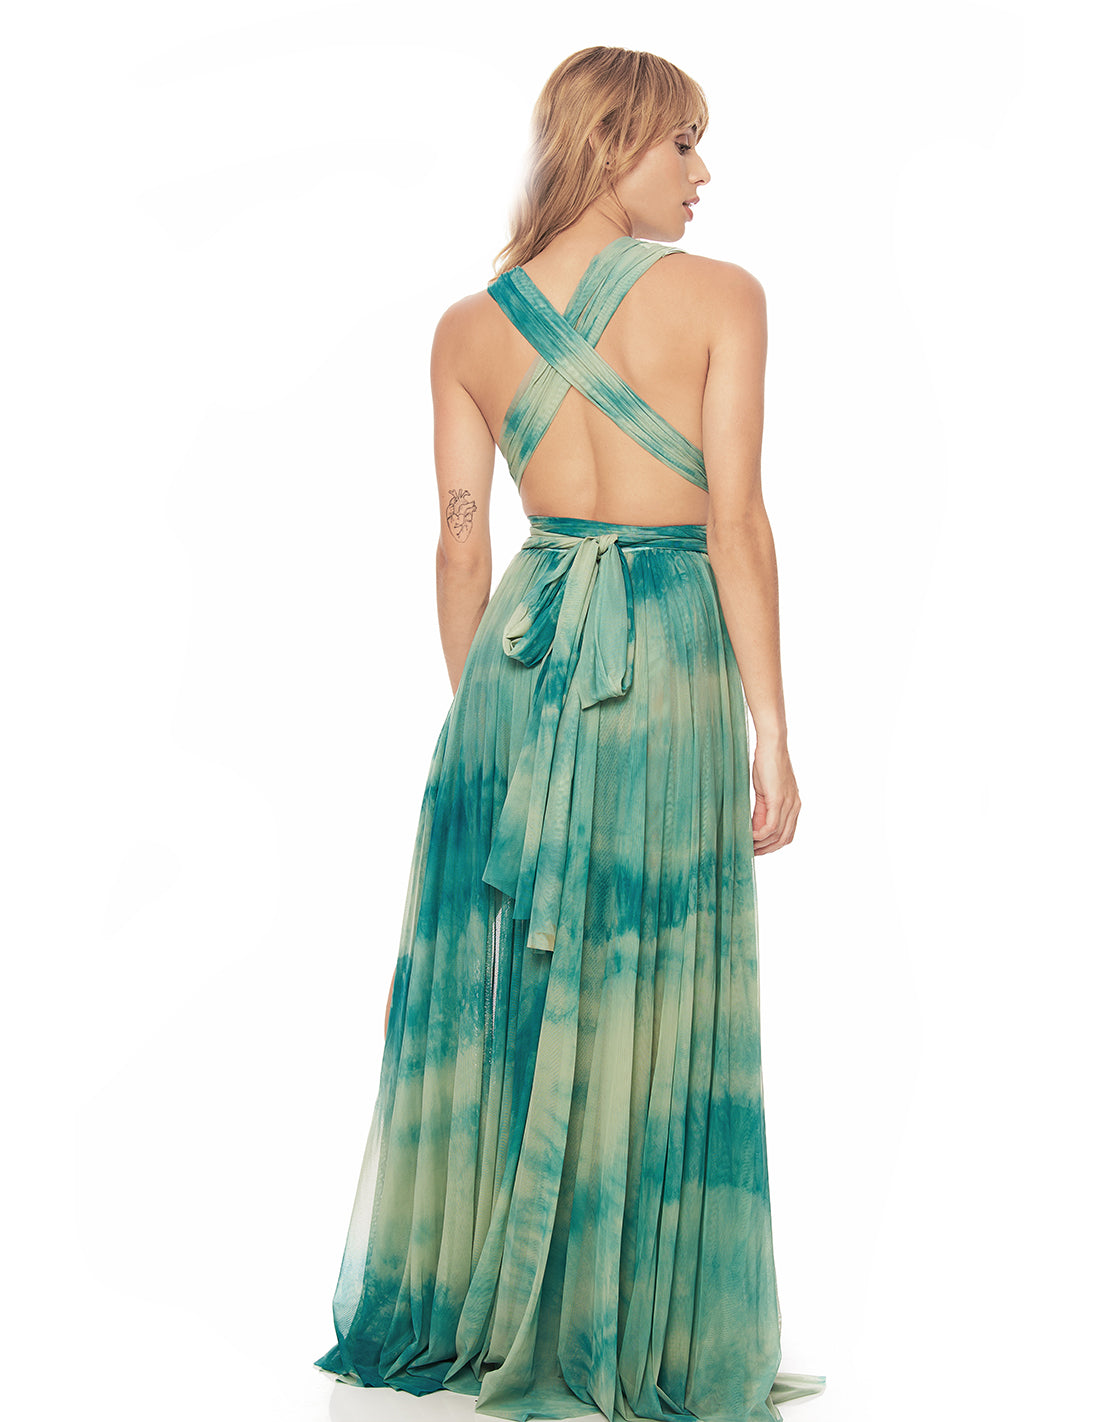 Hydra Dress Aqua Stain. Hand-Dyed Dress In Aqua Stain. Entreaguas